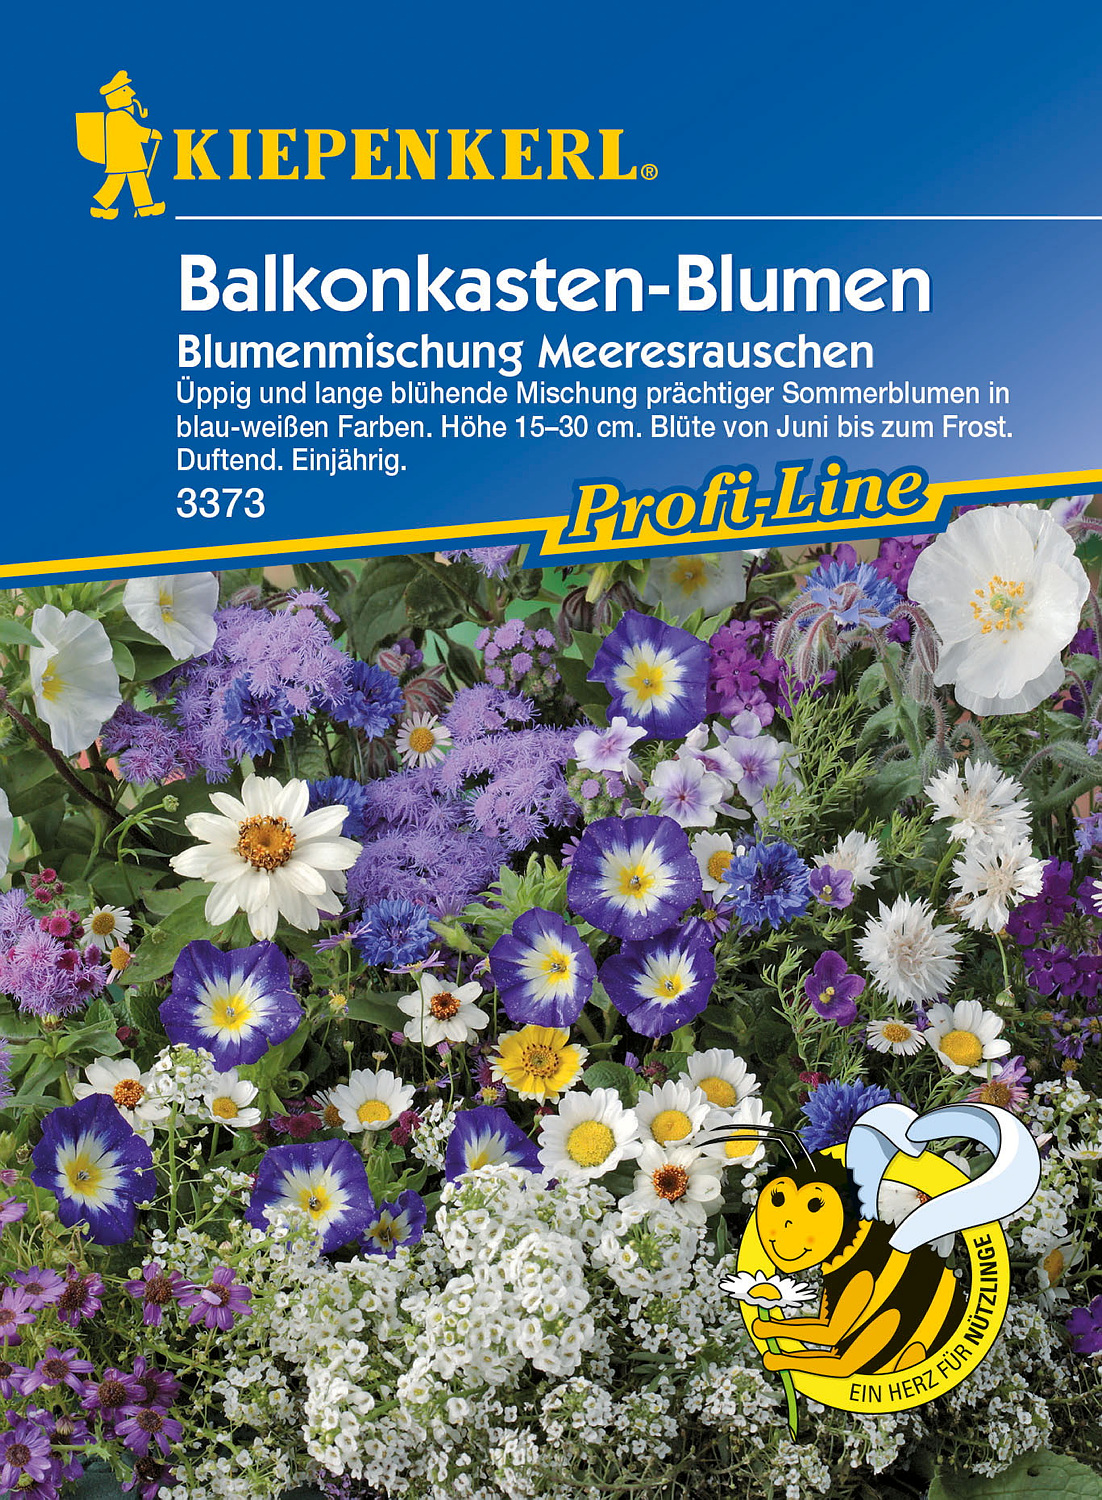 Kiepenkerl® Profi-Line Blumenmischung Balkonkasten-Blumen Meeresrauschen